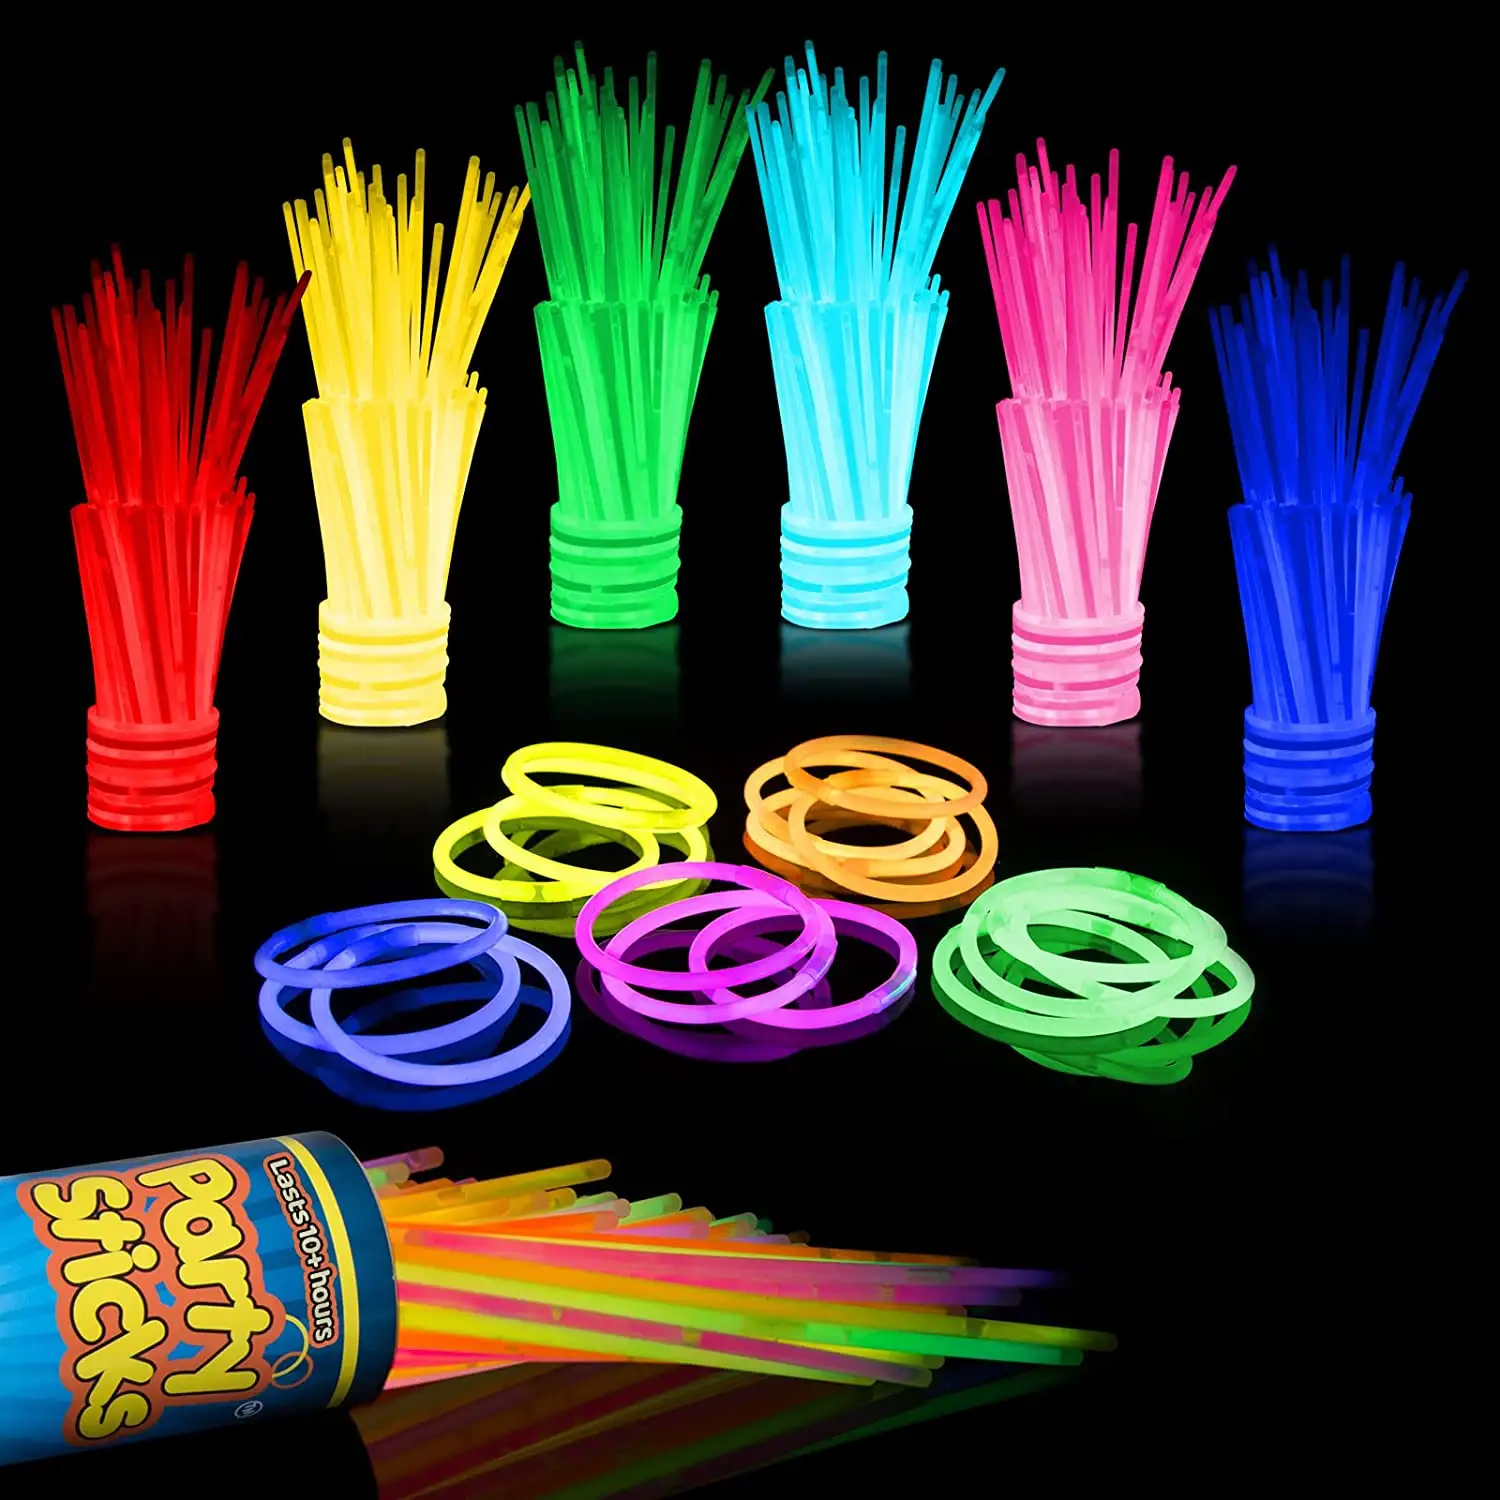 Nicro 8 Inch Glow Stick Pack Kids Child Factory Neon Party Supplies Luminous Led Bracelet Necklace Glasses Light Stick